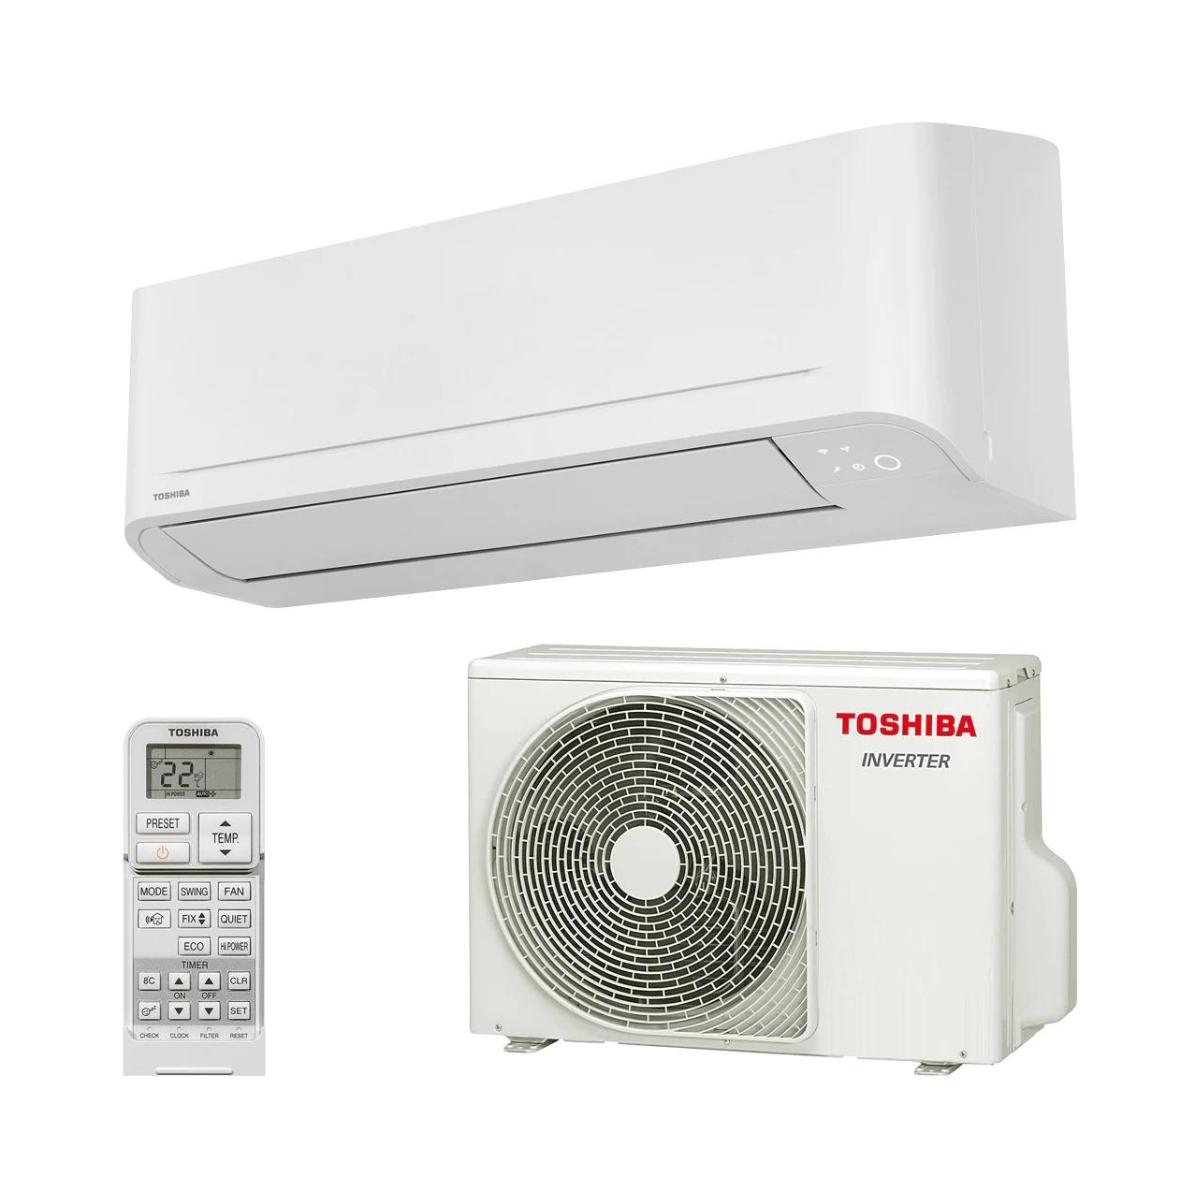 Ar condicionado fixo 1x1 Toshiba Seiya+ 24 6,5 kW 22000 BTU com referência SEIYA+ 24 à marca TOSHIBA